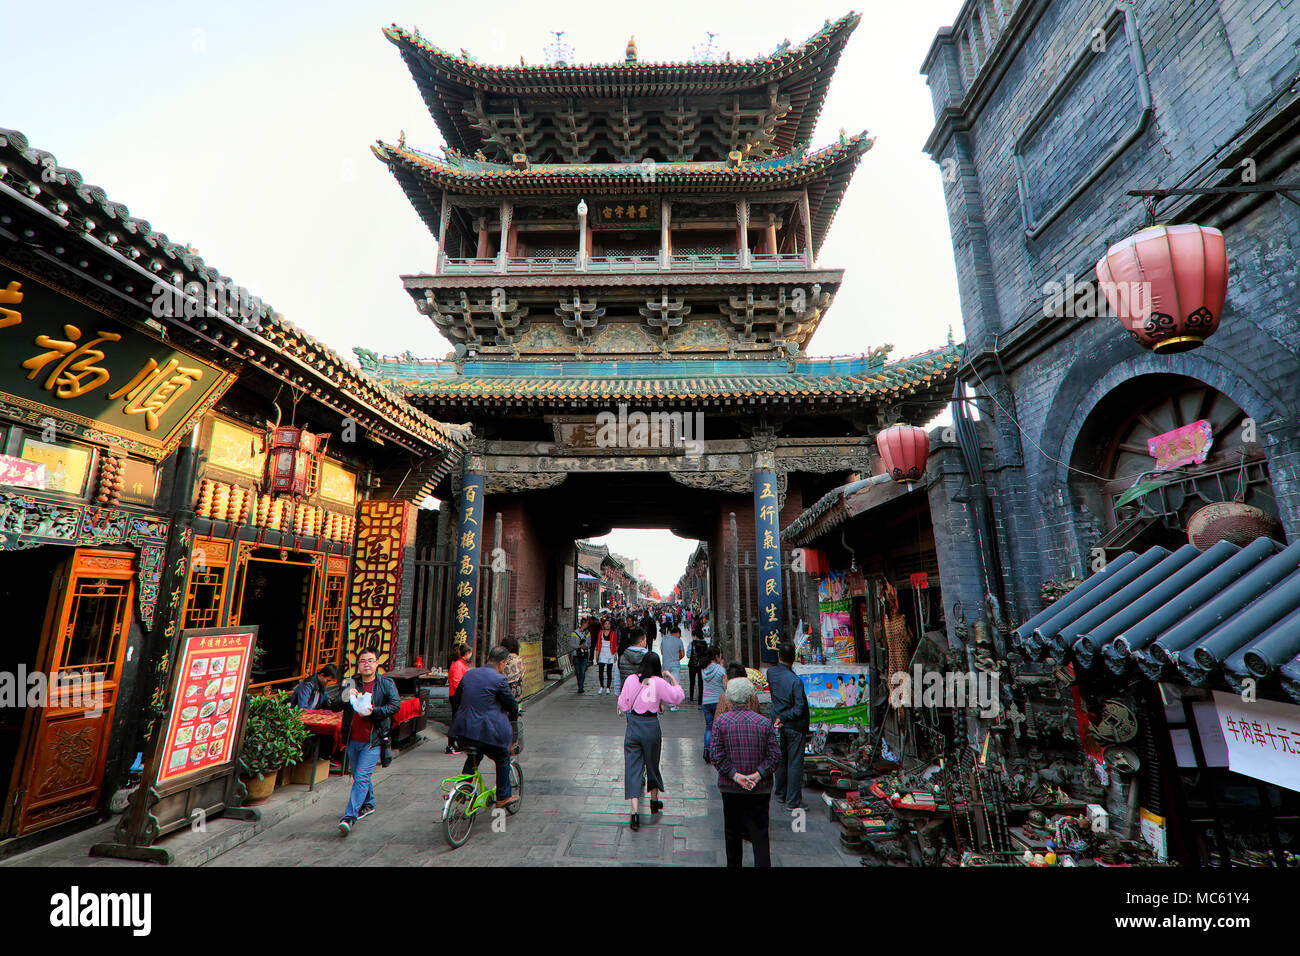 City Tower / Market Tower along Ming-Qing Street, Ancient City of Pingyao, Shanxi Province, China Stock Photo